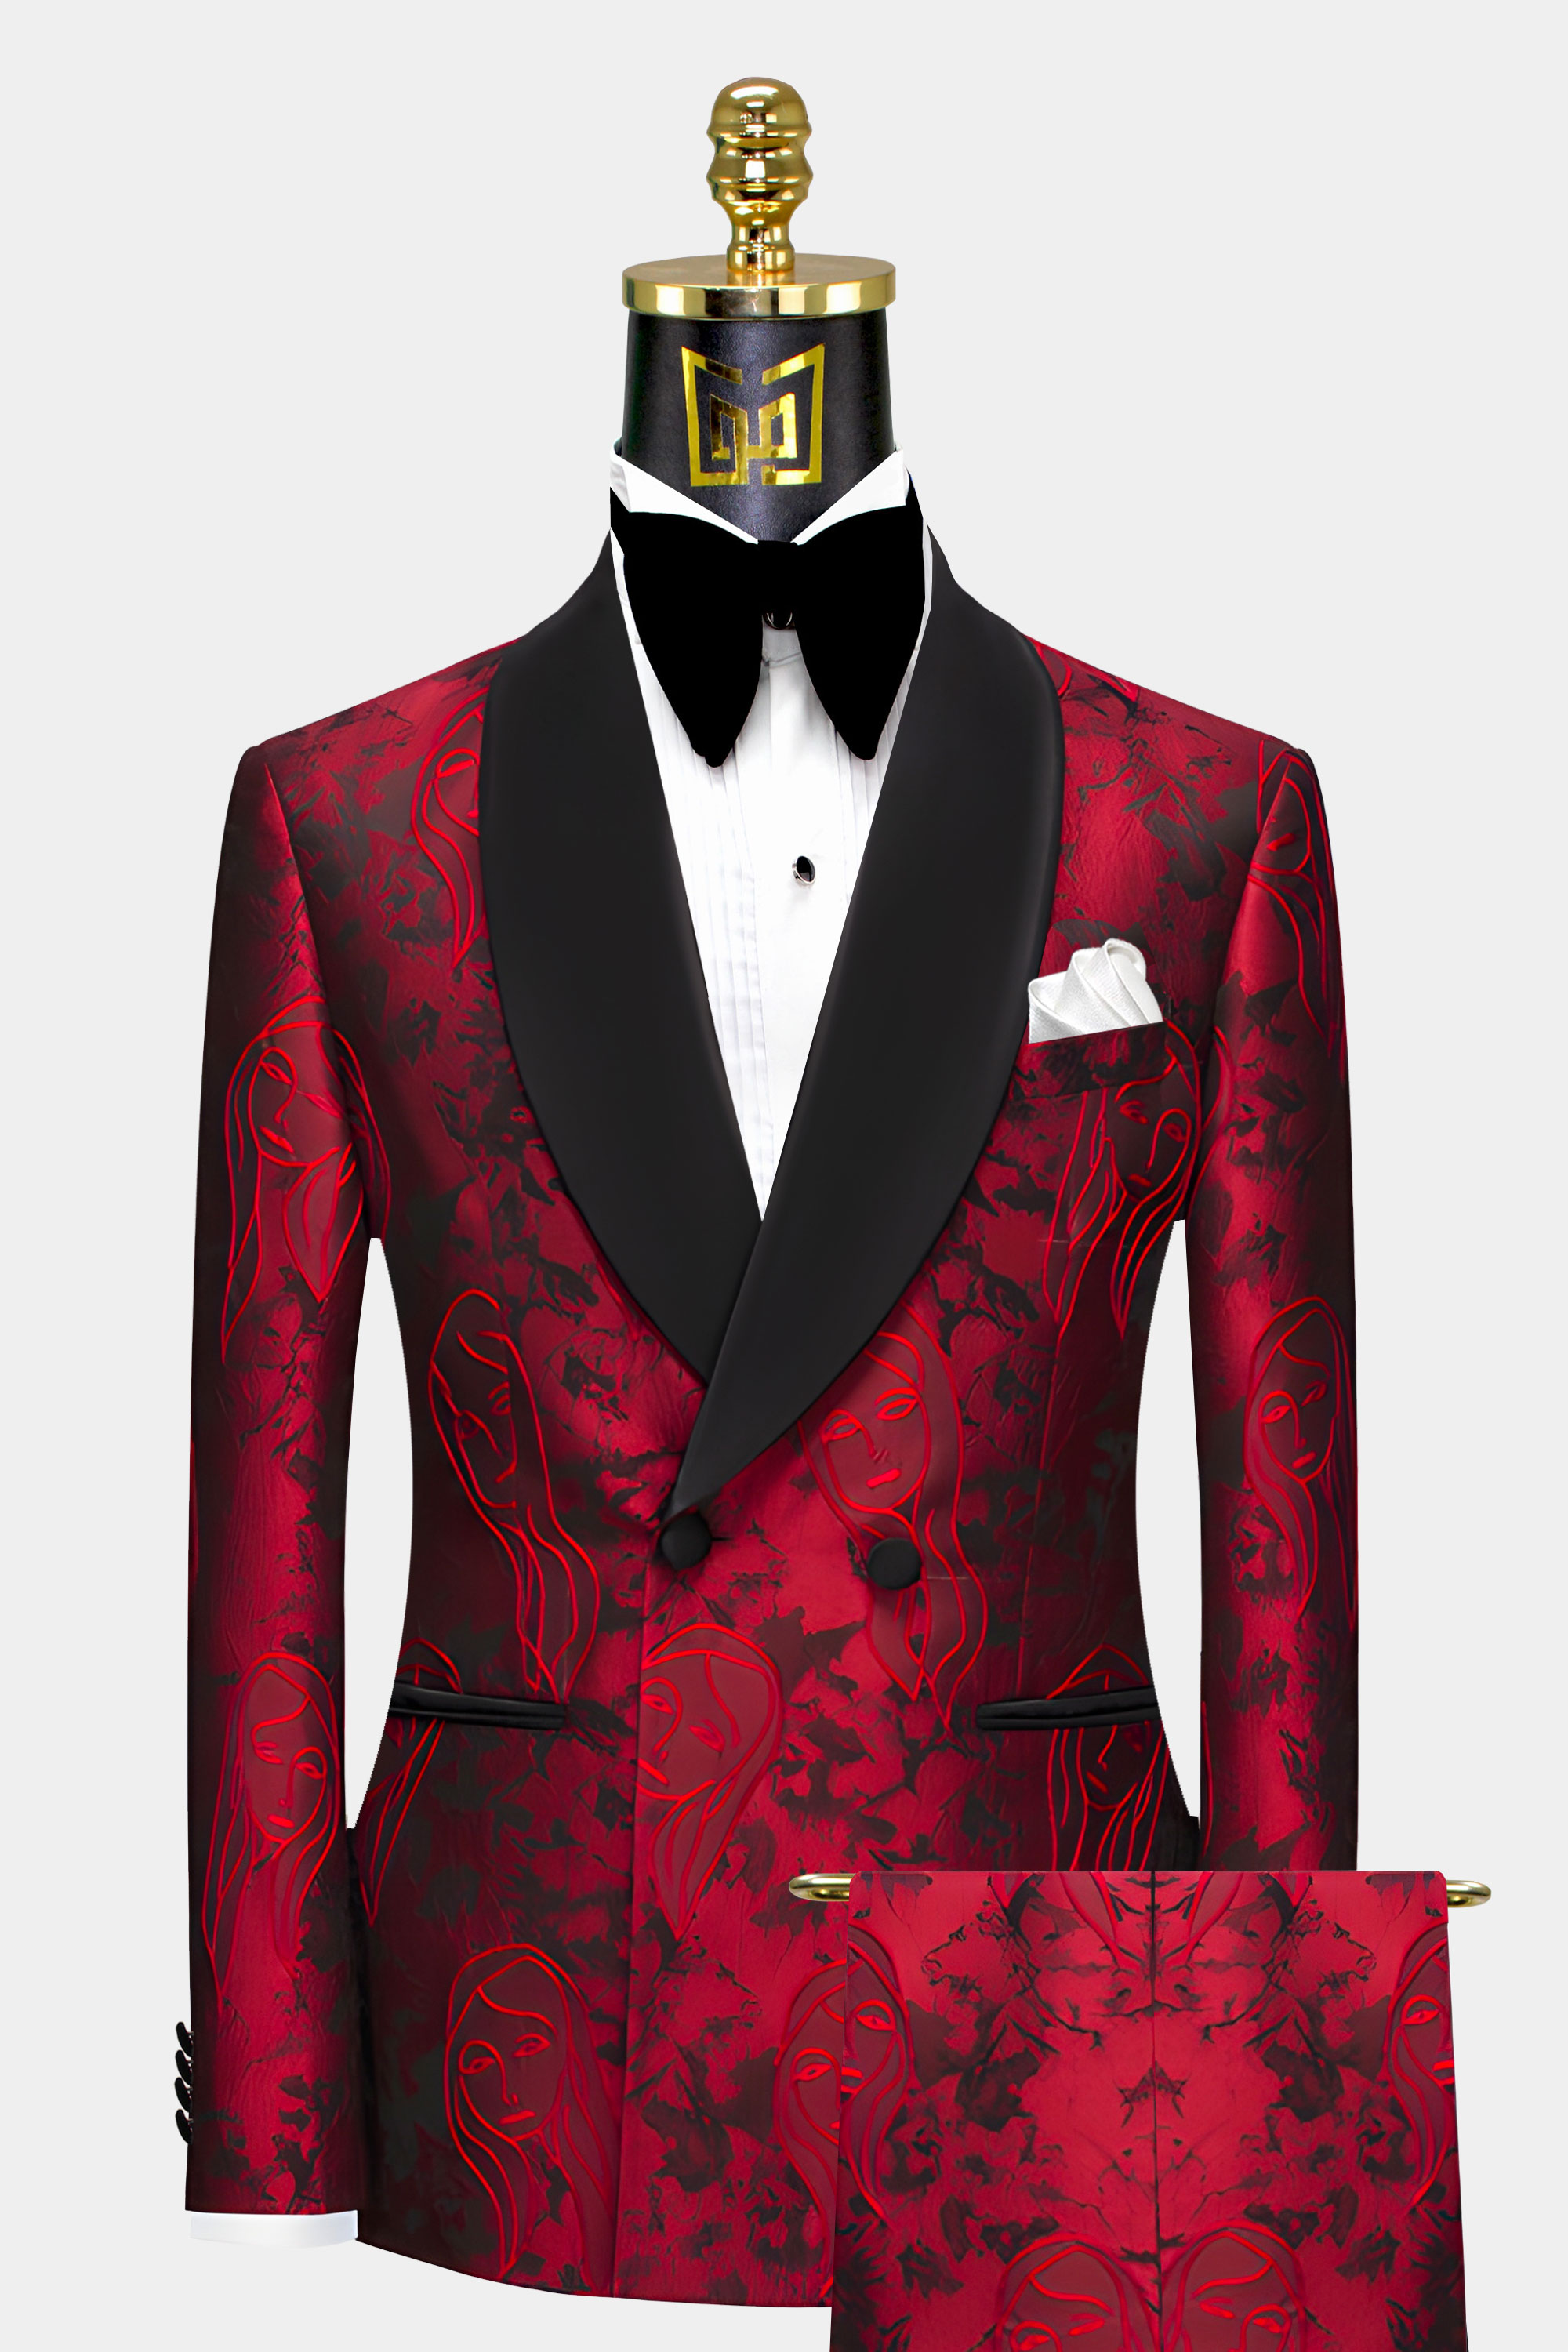 Mens-Blood-red-Tuxedo-Burgundy-Geisha-Groom-Wedding-Prom-Suit-from-Gentlemansguru.com